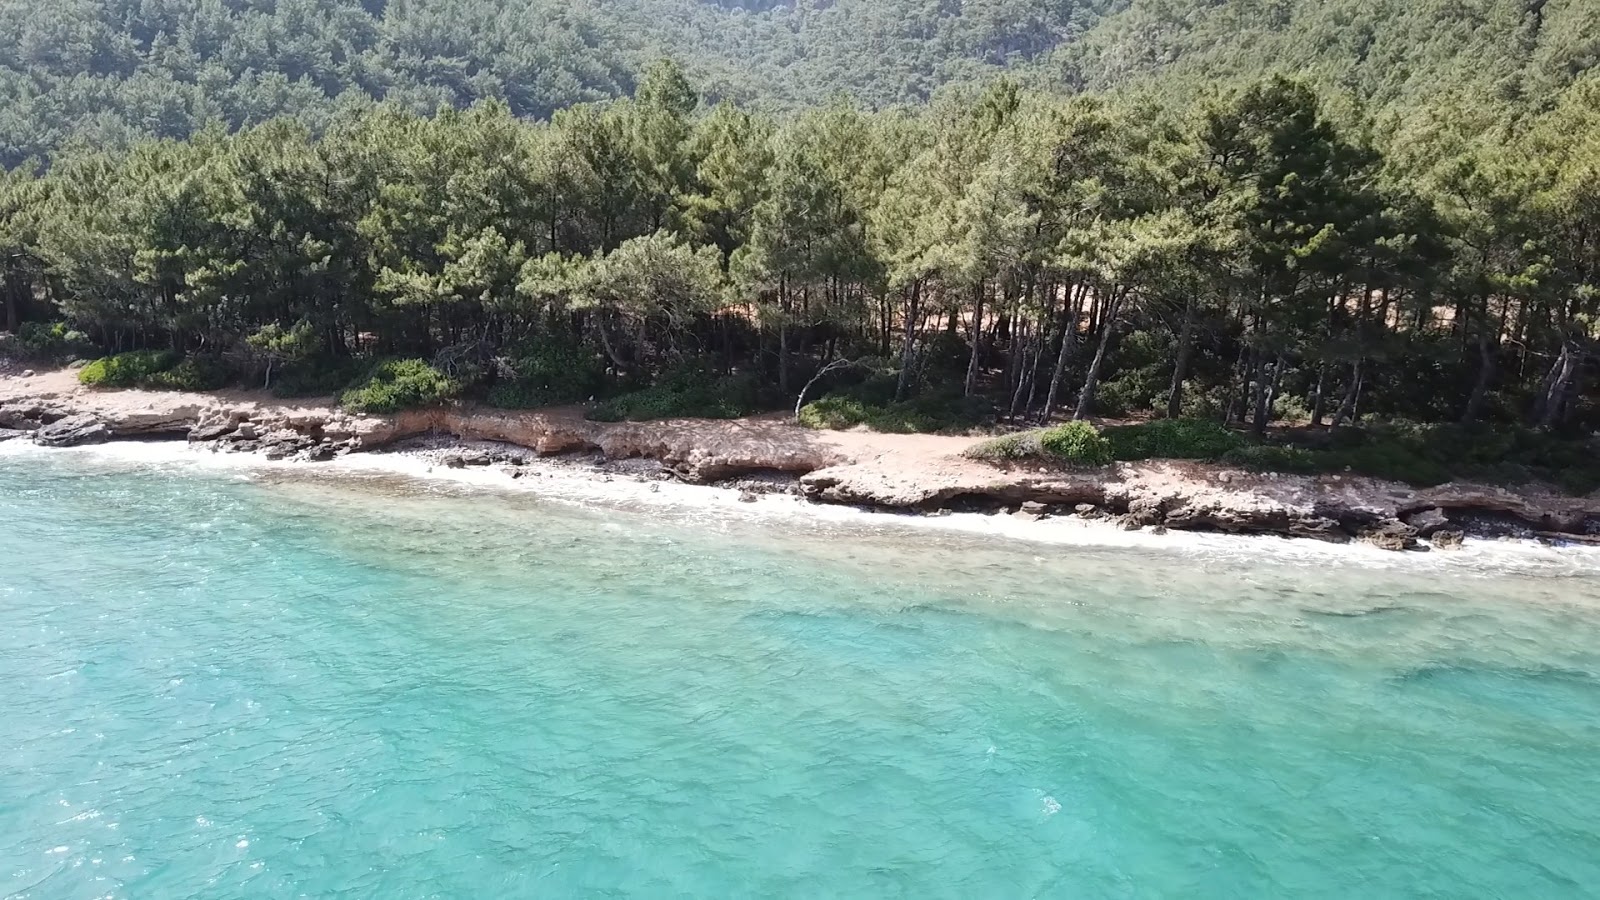 Foto af Ufuk beach med turkis rent vand overflade